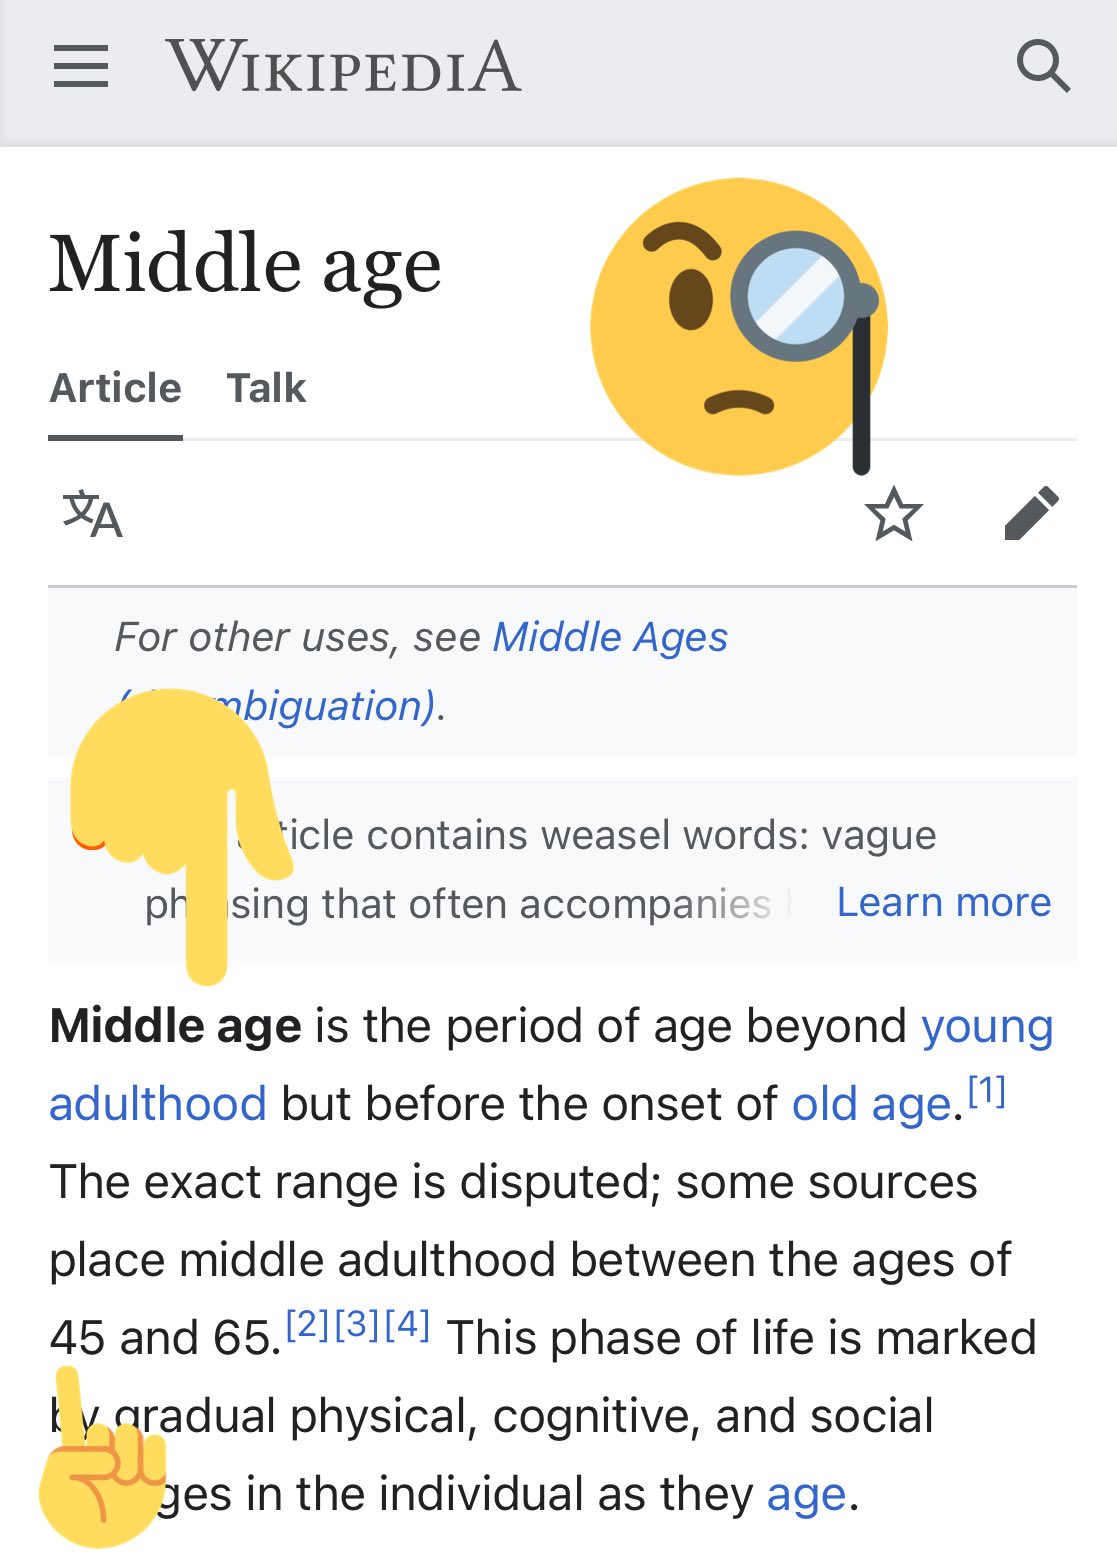 Dammit - Wikipedia